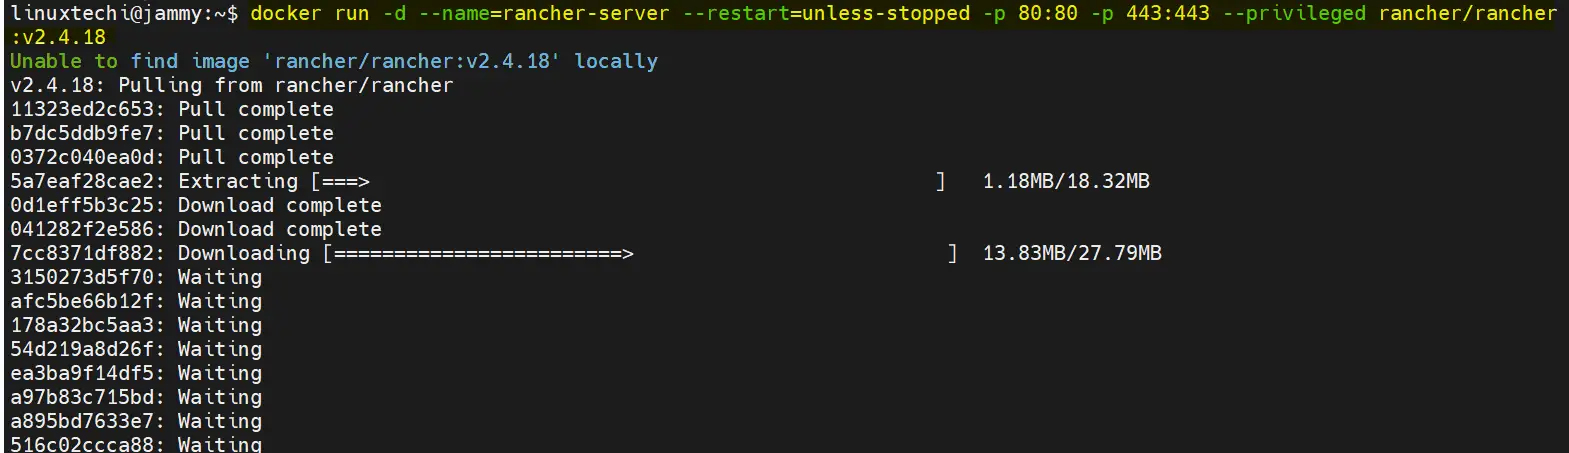 Docker-Run-Rancher-Server-Ubuntu